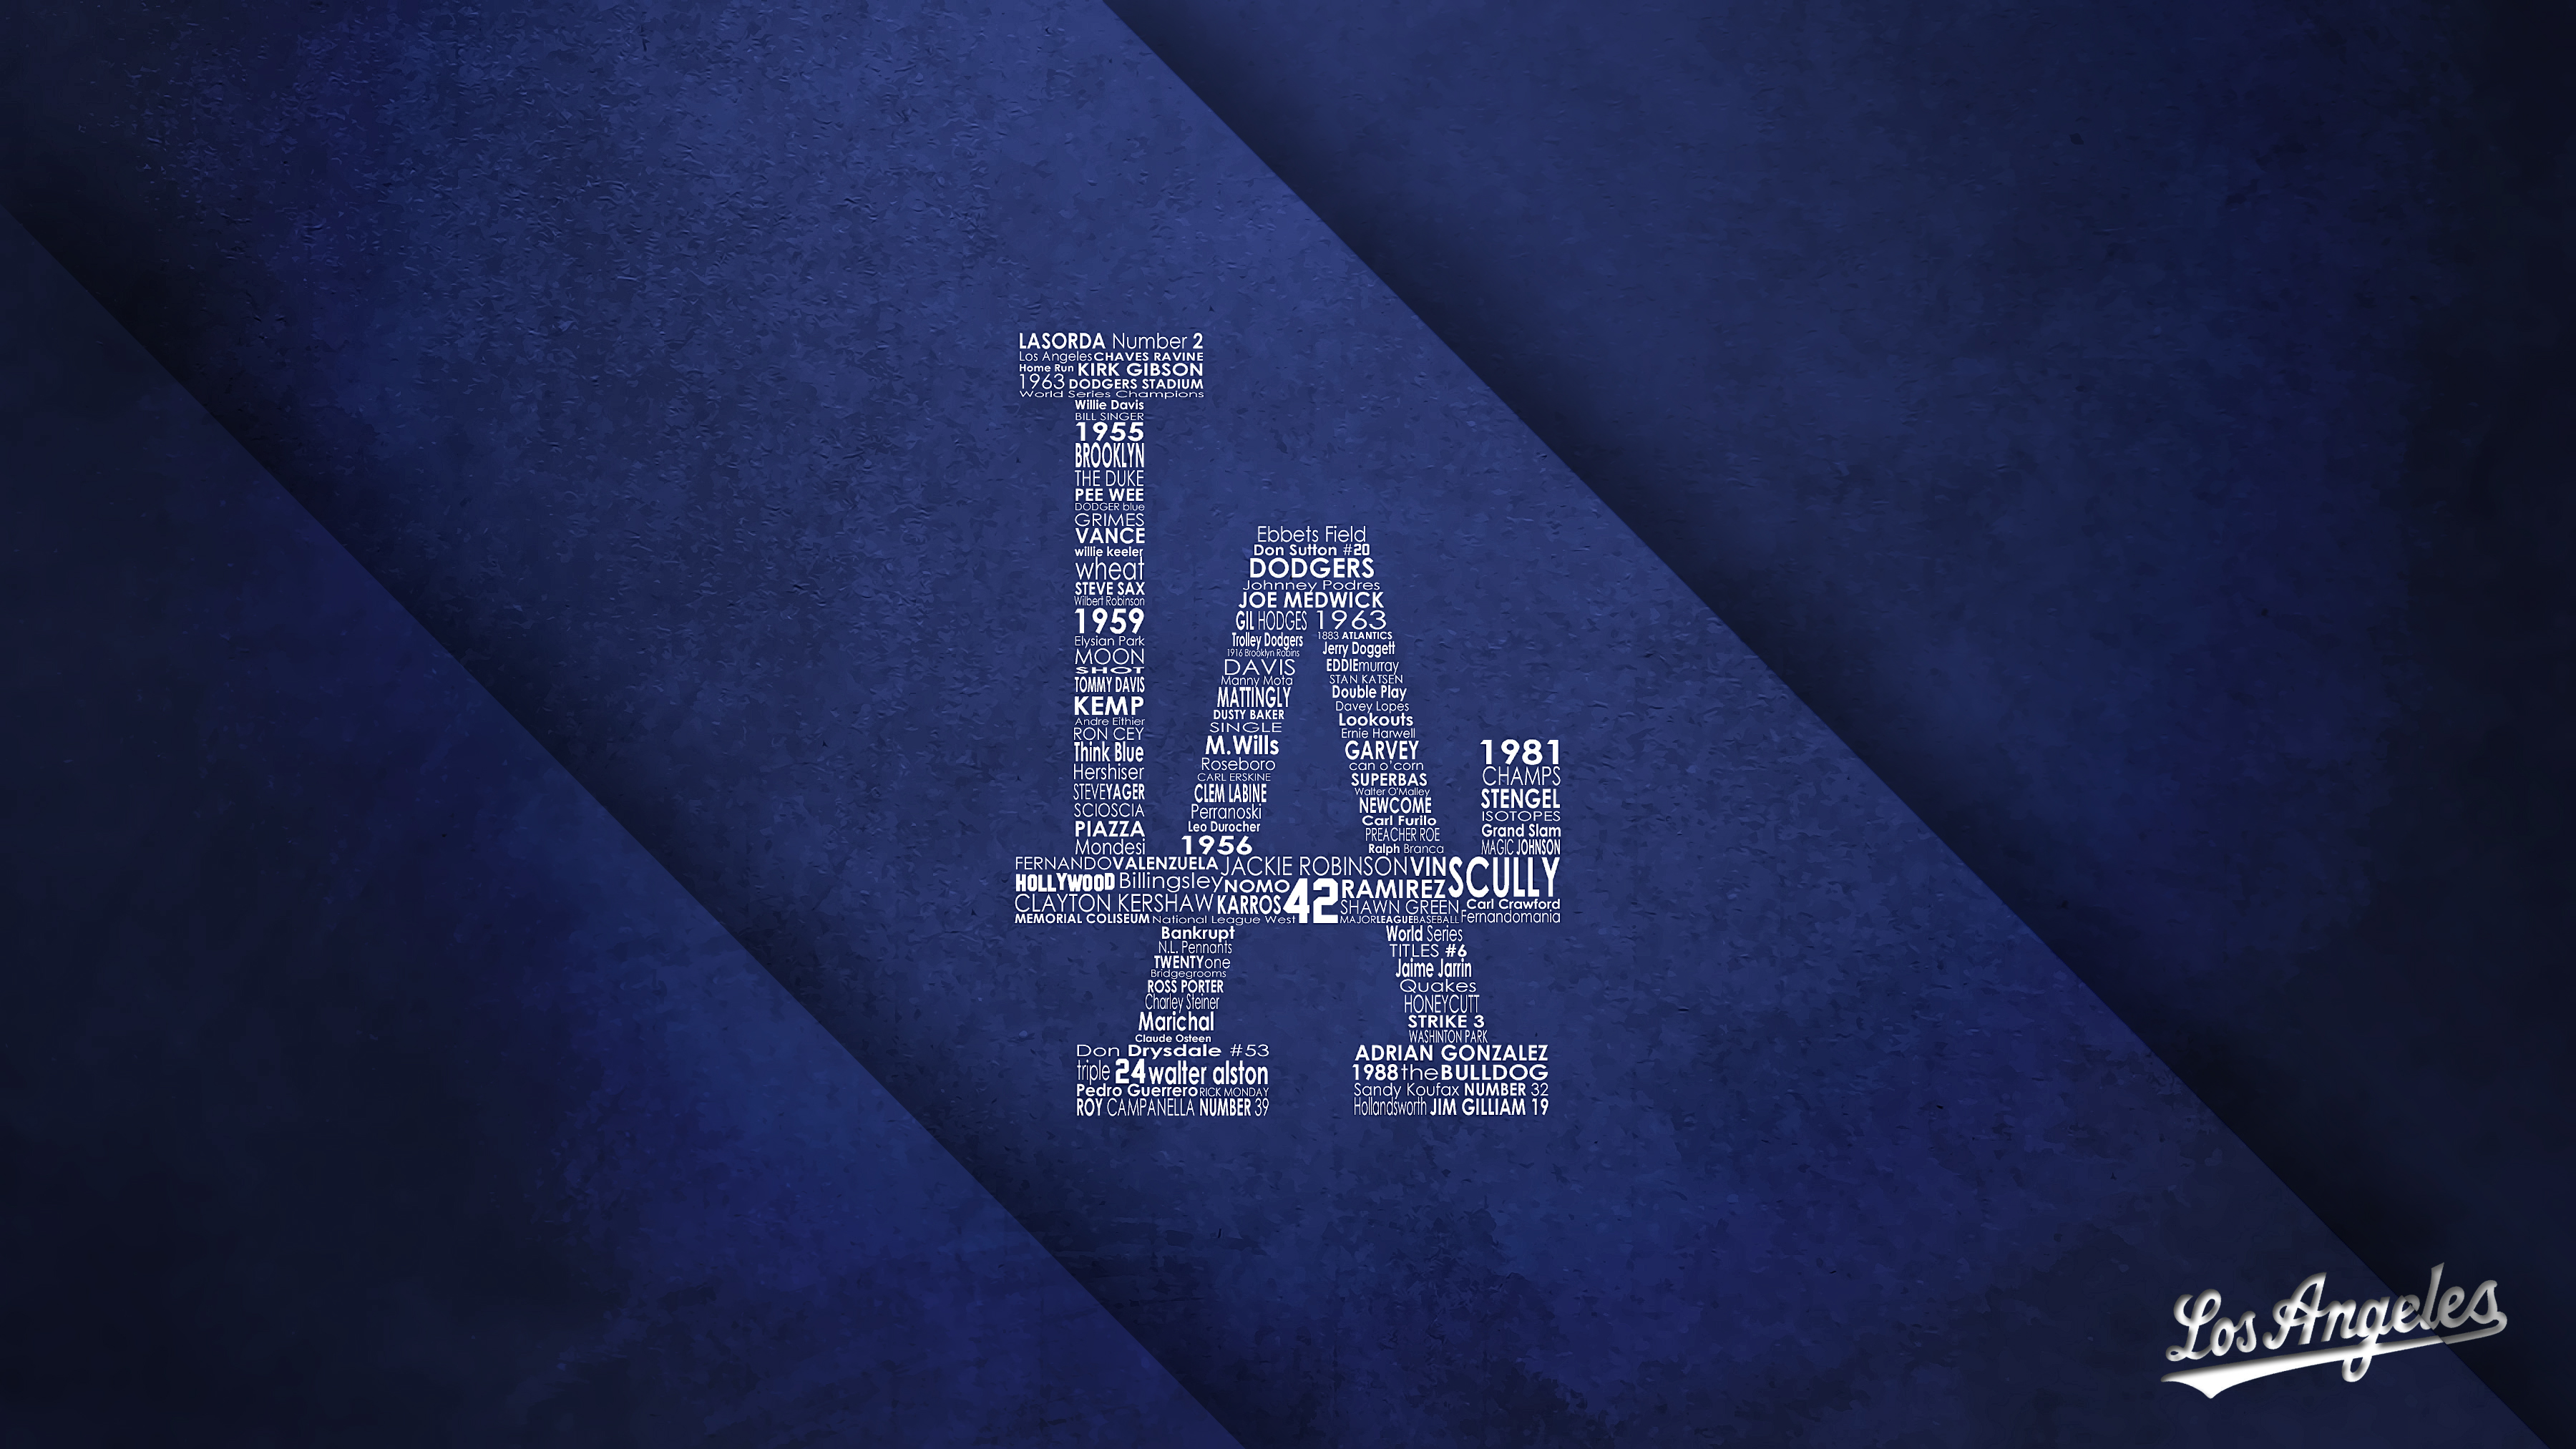 Los Angeles Dodgers Wallpaper Wqo5o3j 4usky